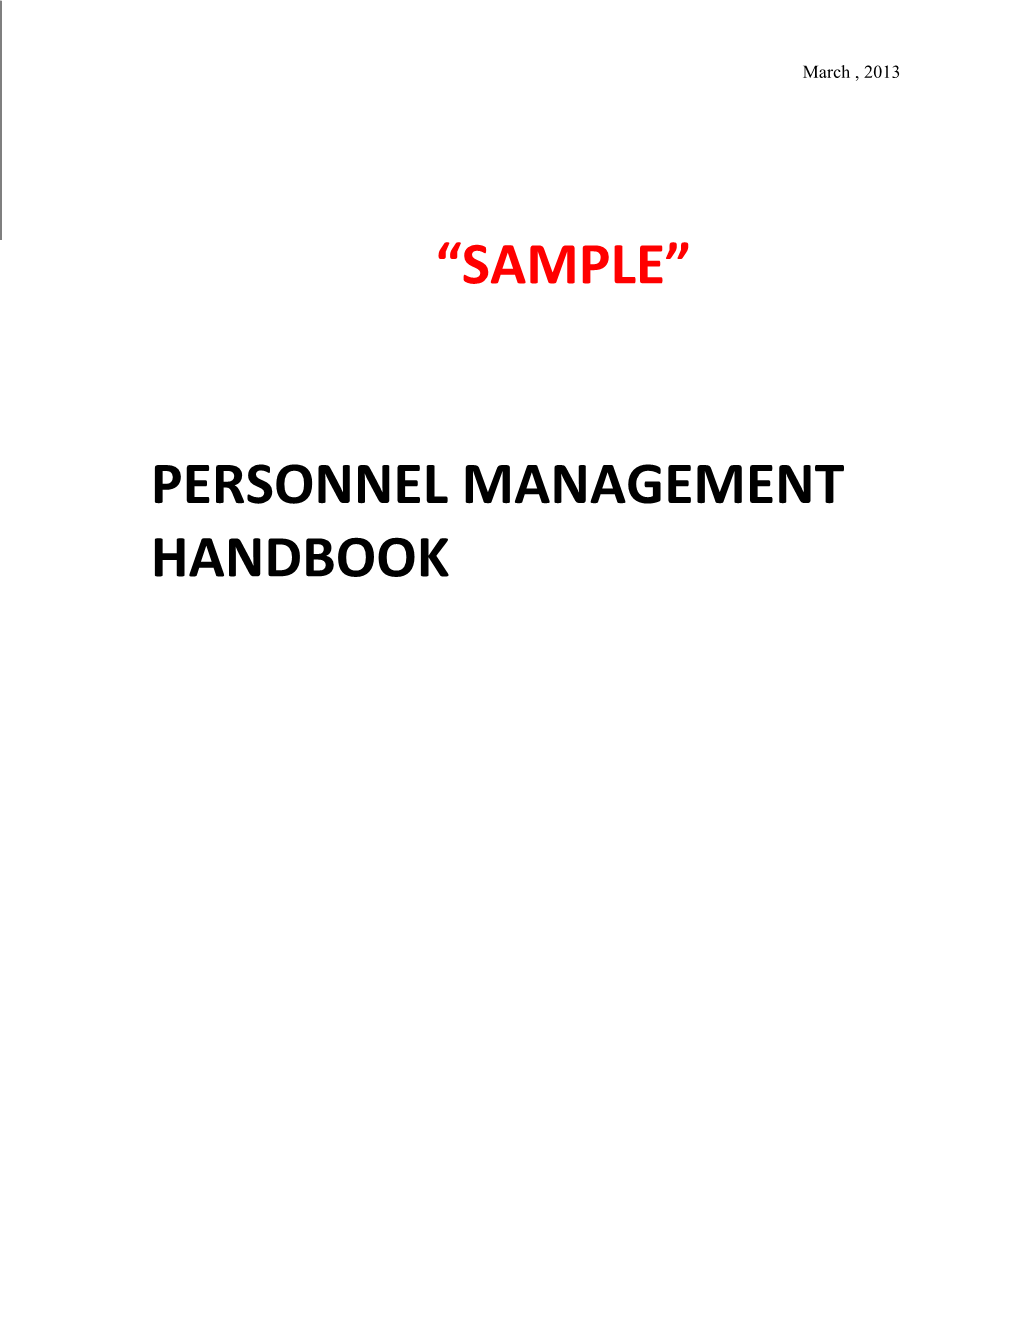 Personnel Management HANDBOOK